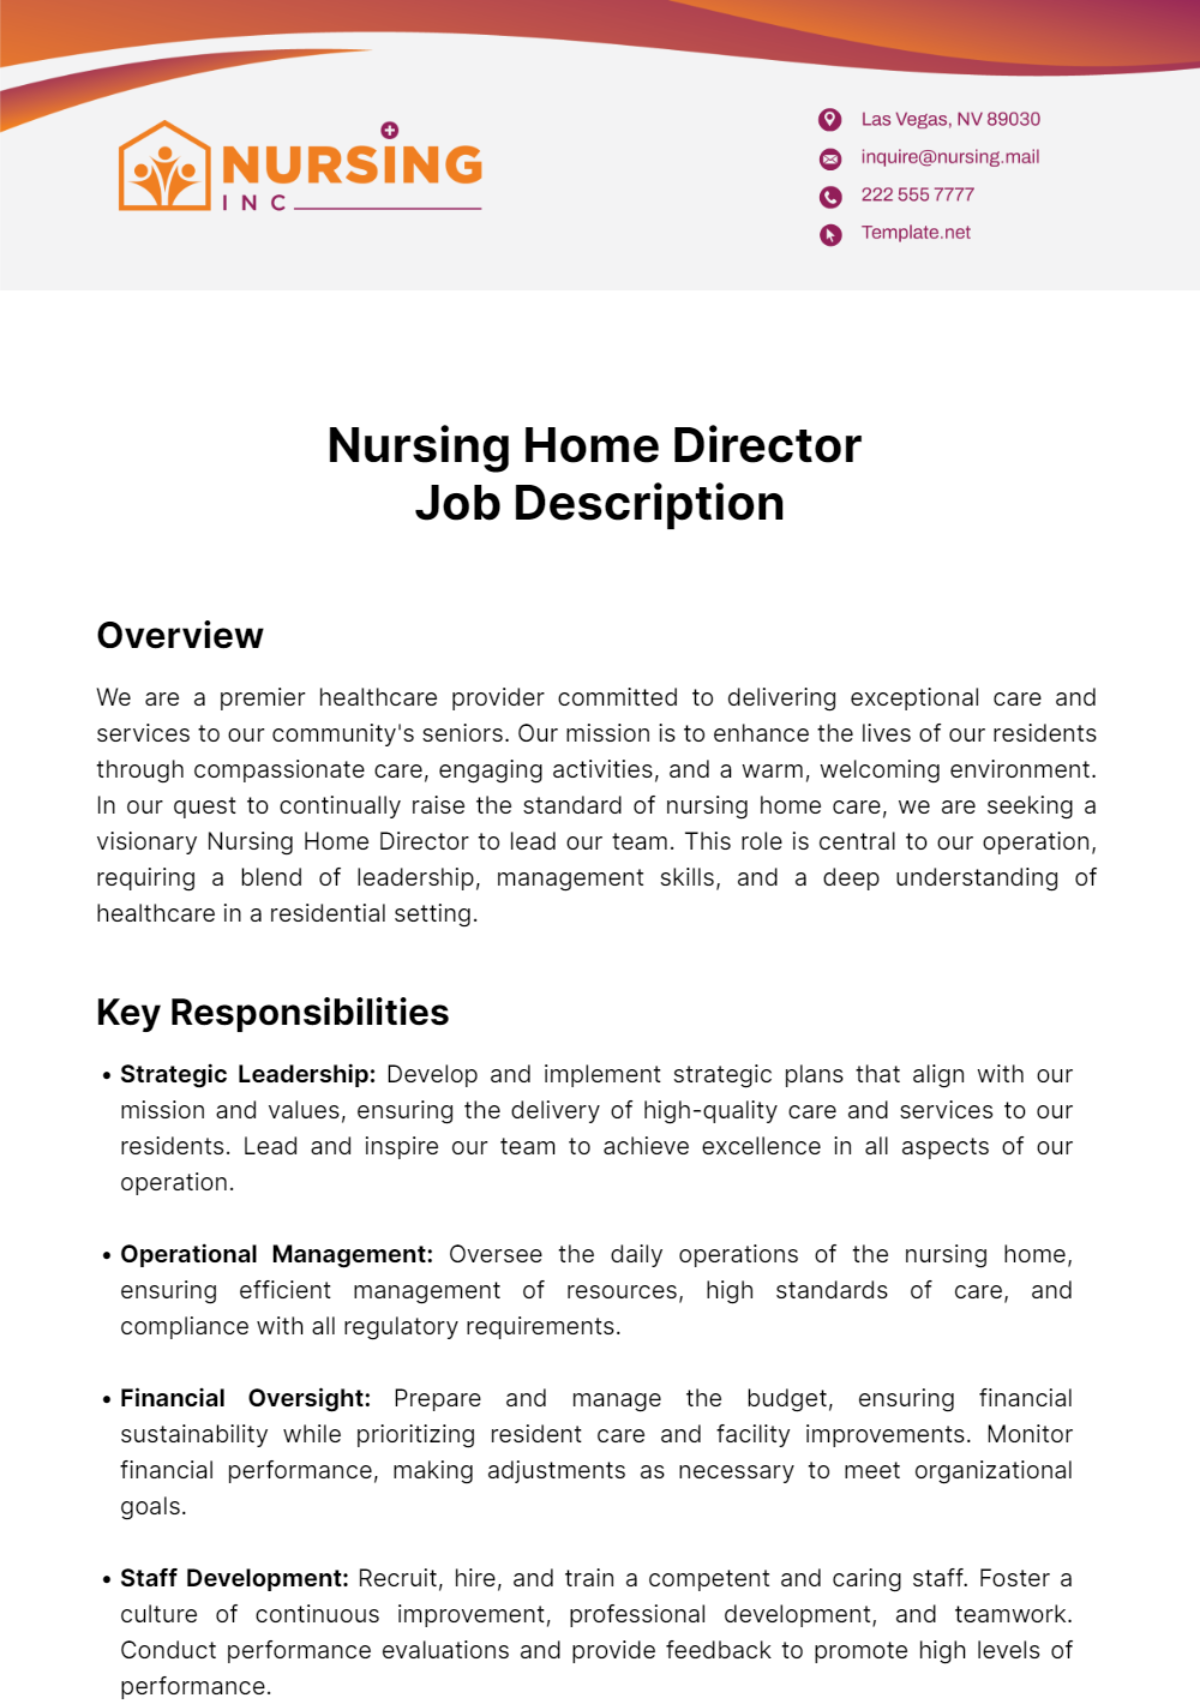 Nursing Home Director Job Description Template